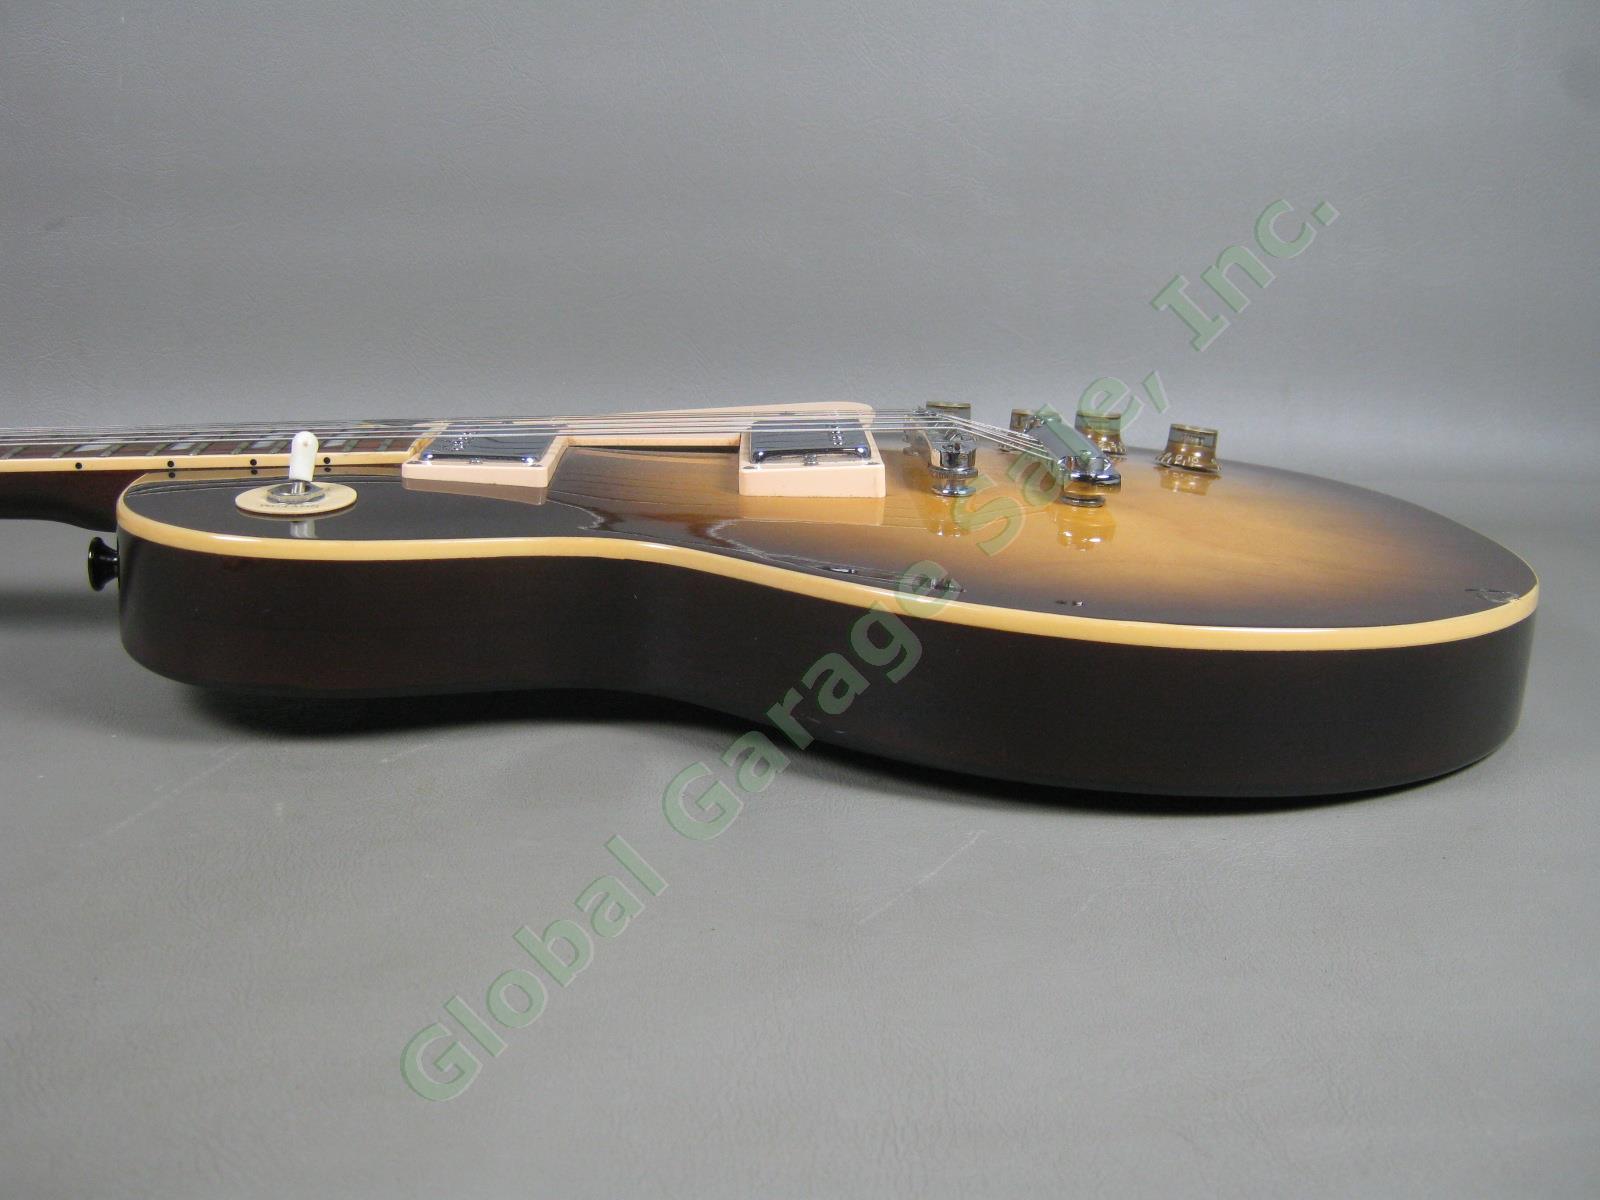 Vtg Matsumoku Aria Mach 1 Les Paul Copy Electric Guitar MIJ Made in Japan NO RES 8